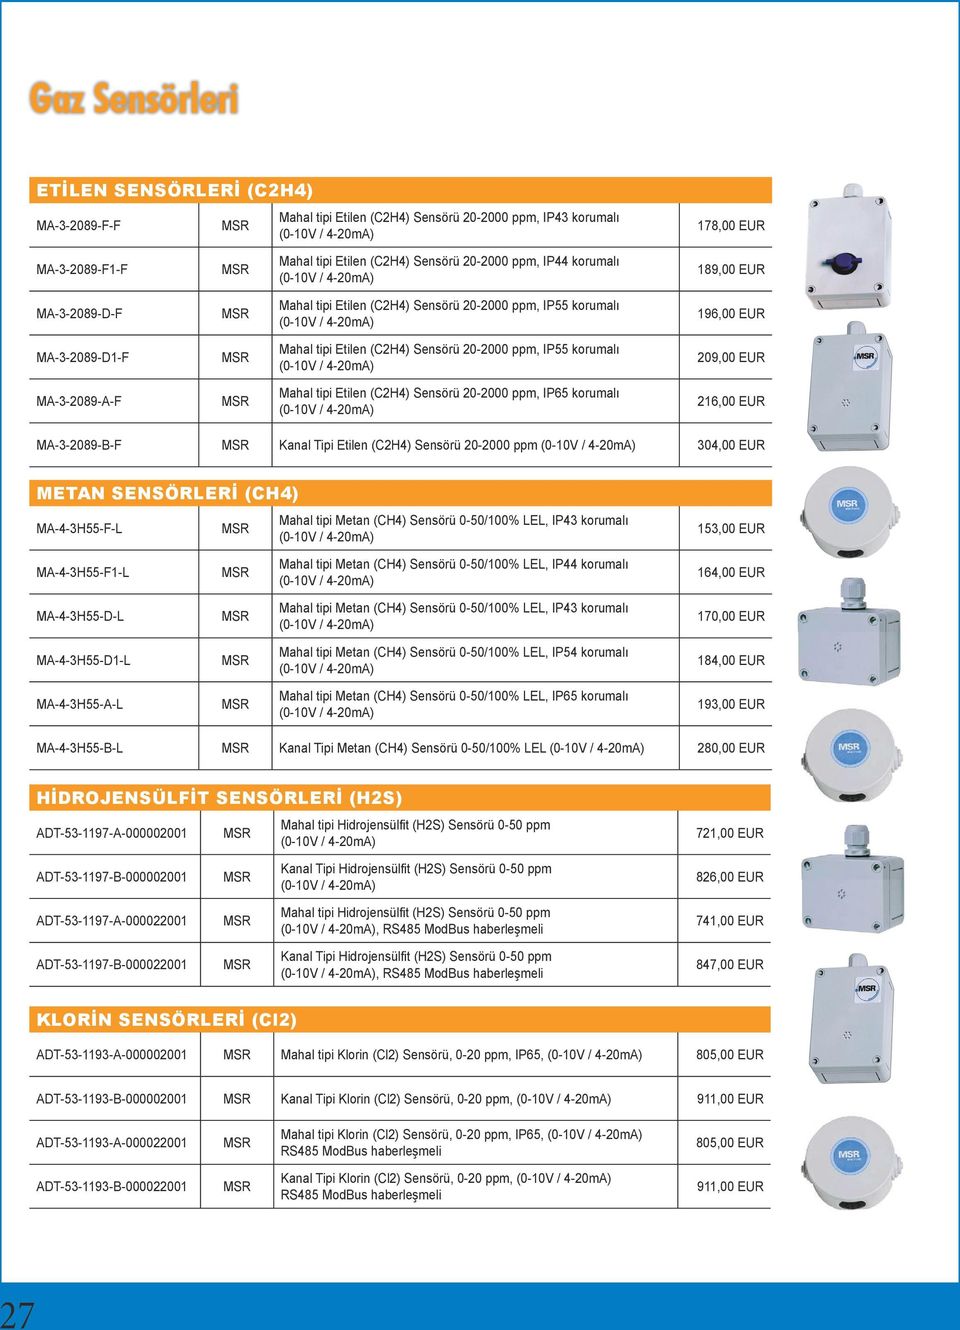 Mahal tipi Etilen (C2H4) Sensörü 20-2000 ppm, IP65 korumalı 216,00 EUR MA-3-2089-B-F Kanal Tipi Etilen (C2H4) Sensörü 20-2000 ppm 304,00 EUR METAN SENSÖRLERİ (CH4) MA-4-3H55-F-L Mahal tipi Metan